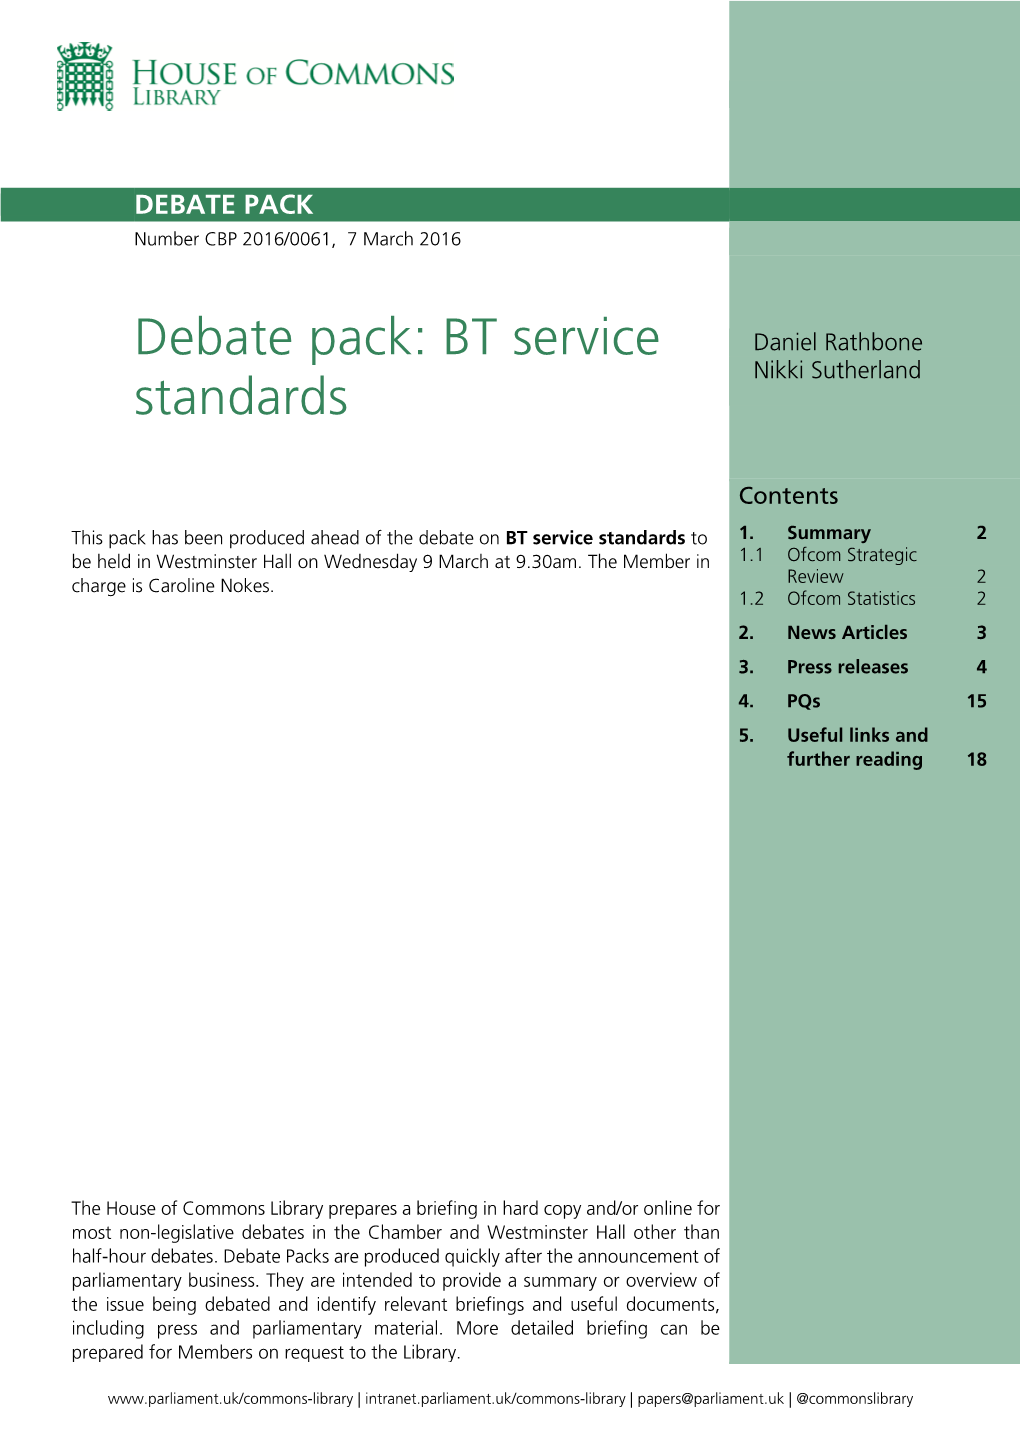 Debate Pack: BT Service Standards 3